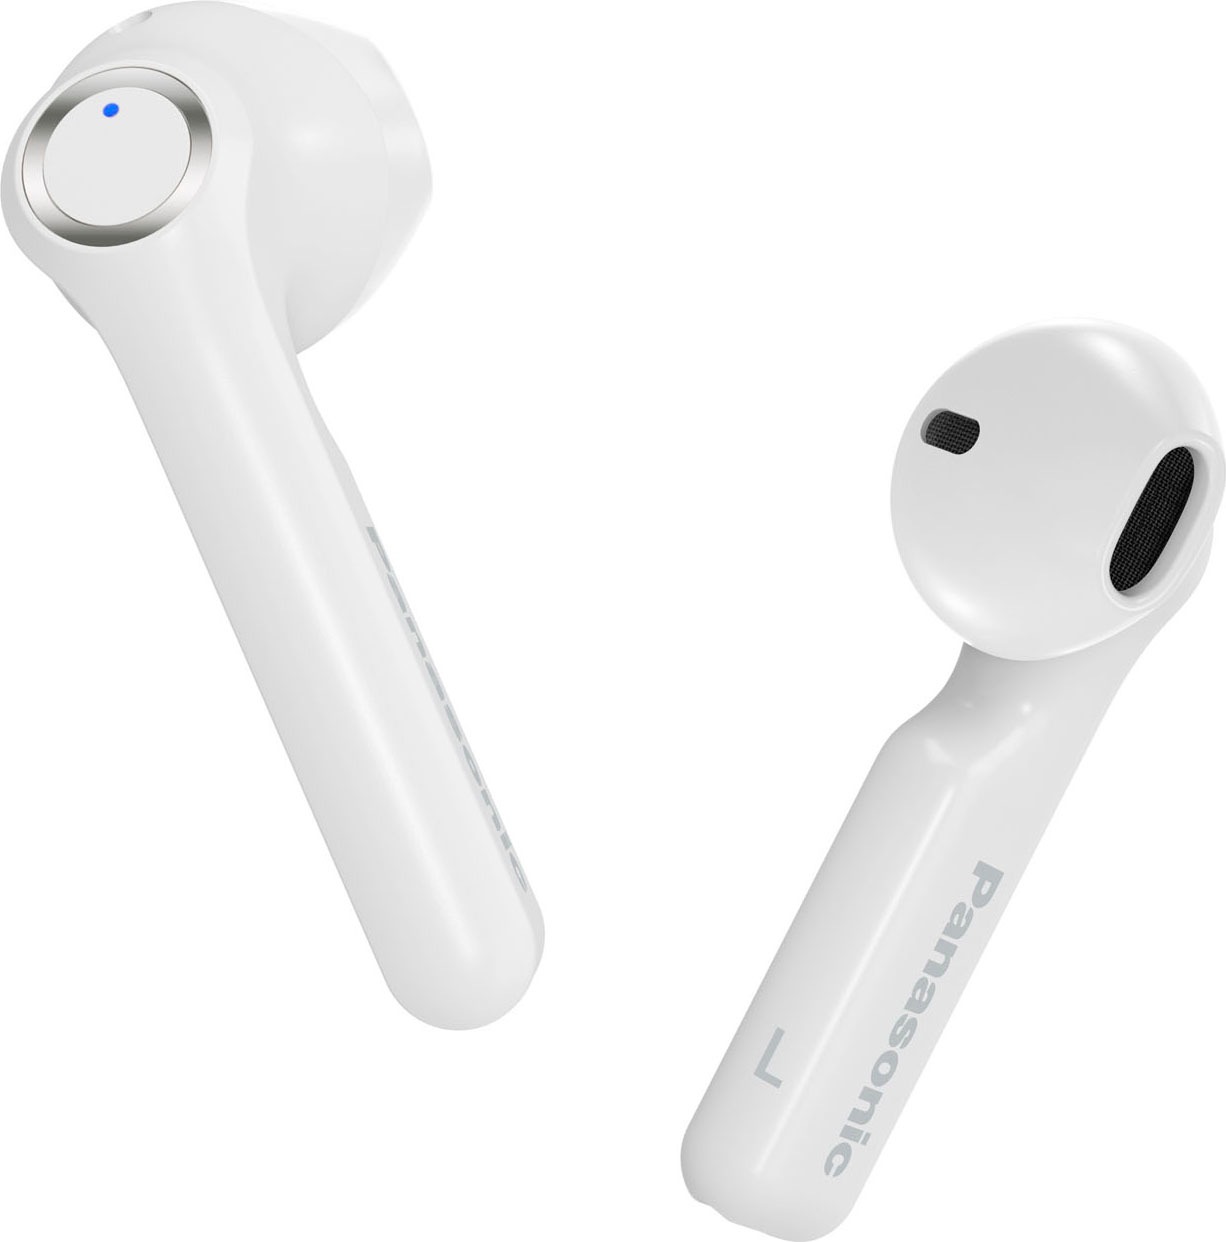 Panasonic Wireless In-Ear-Kopfhörer »RZ-B100« Bl...